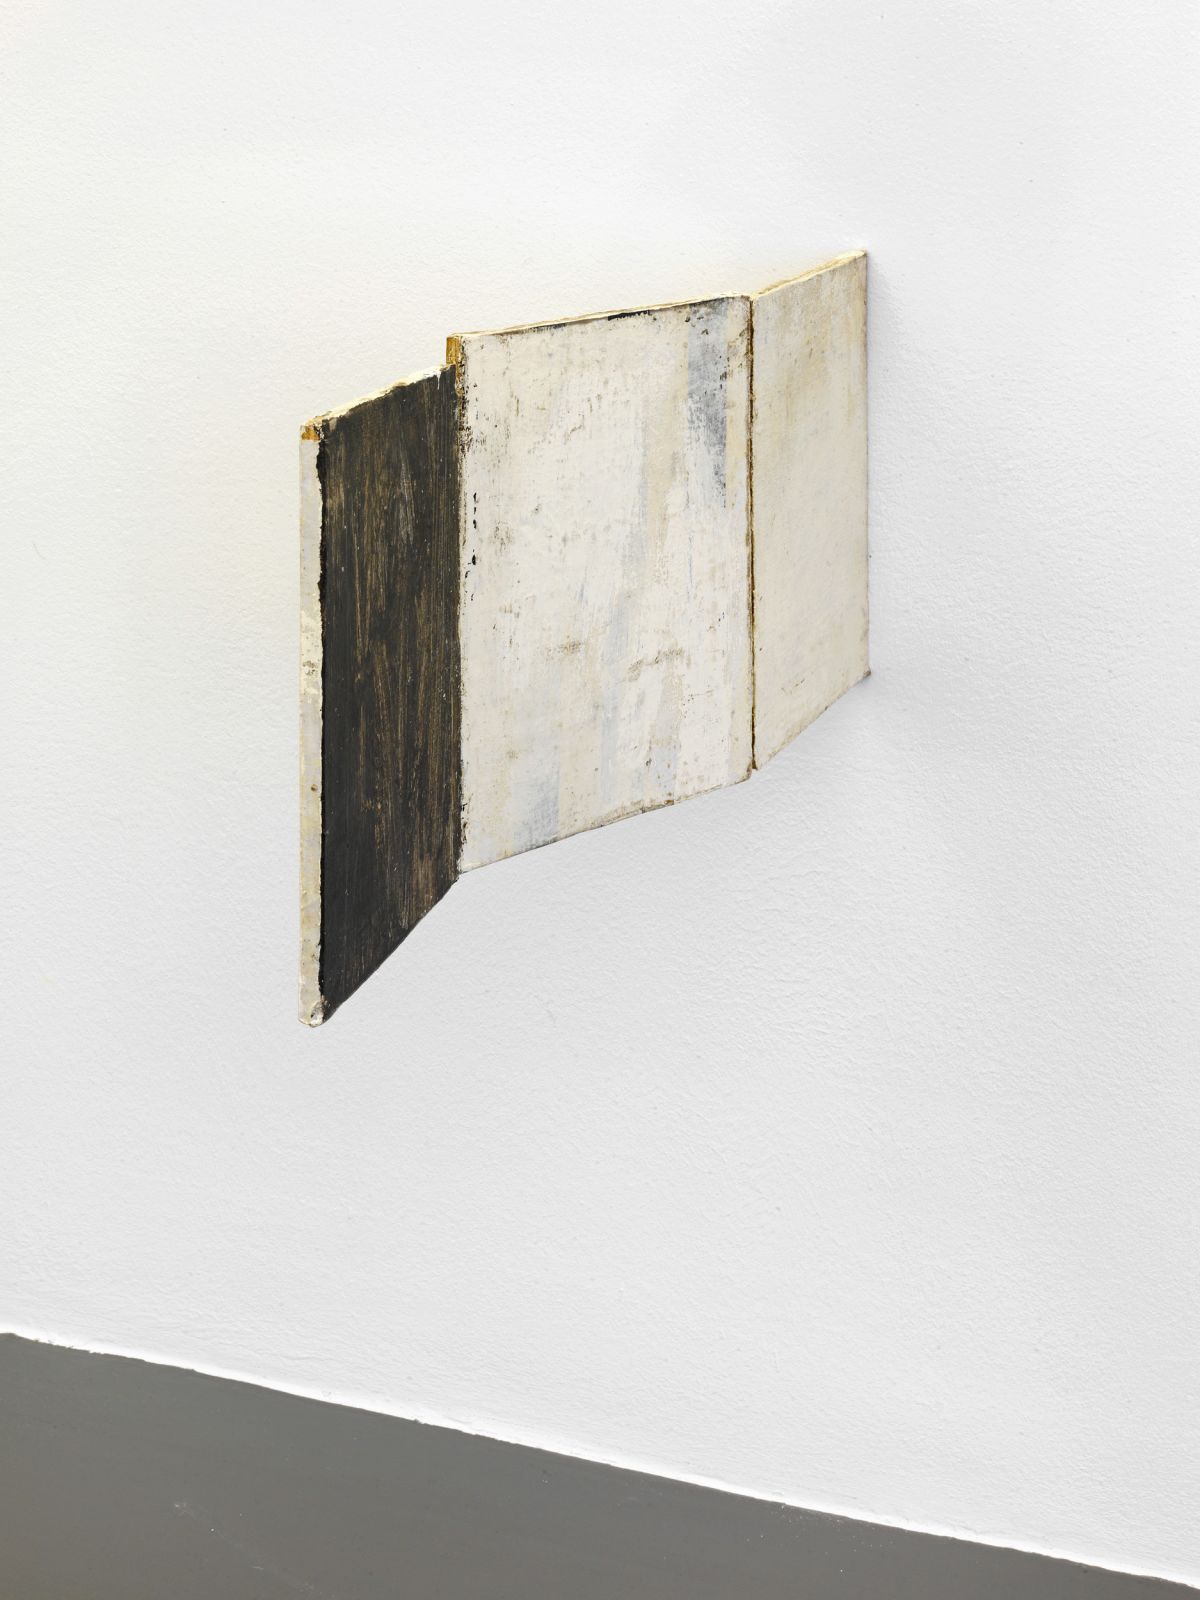 Lawrence Carroll, ‘Untitled (hinge painting)’, 2013, Öl und Wachs auf Leinwand auf Holz